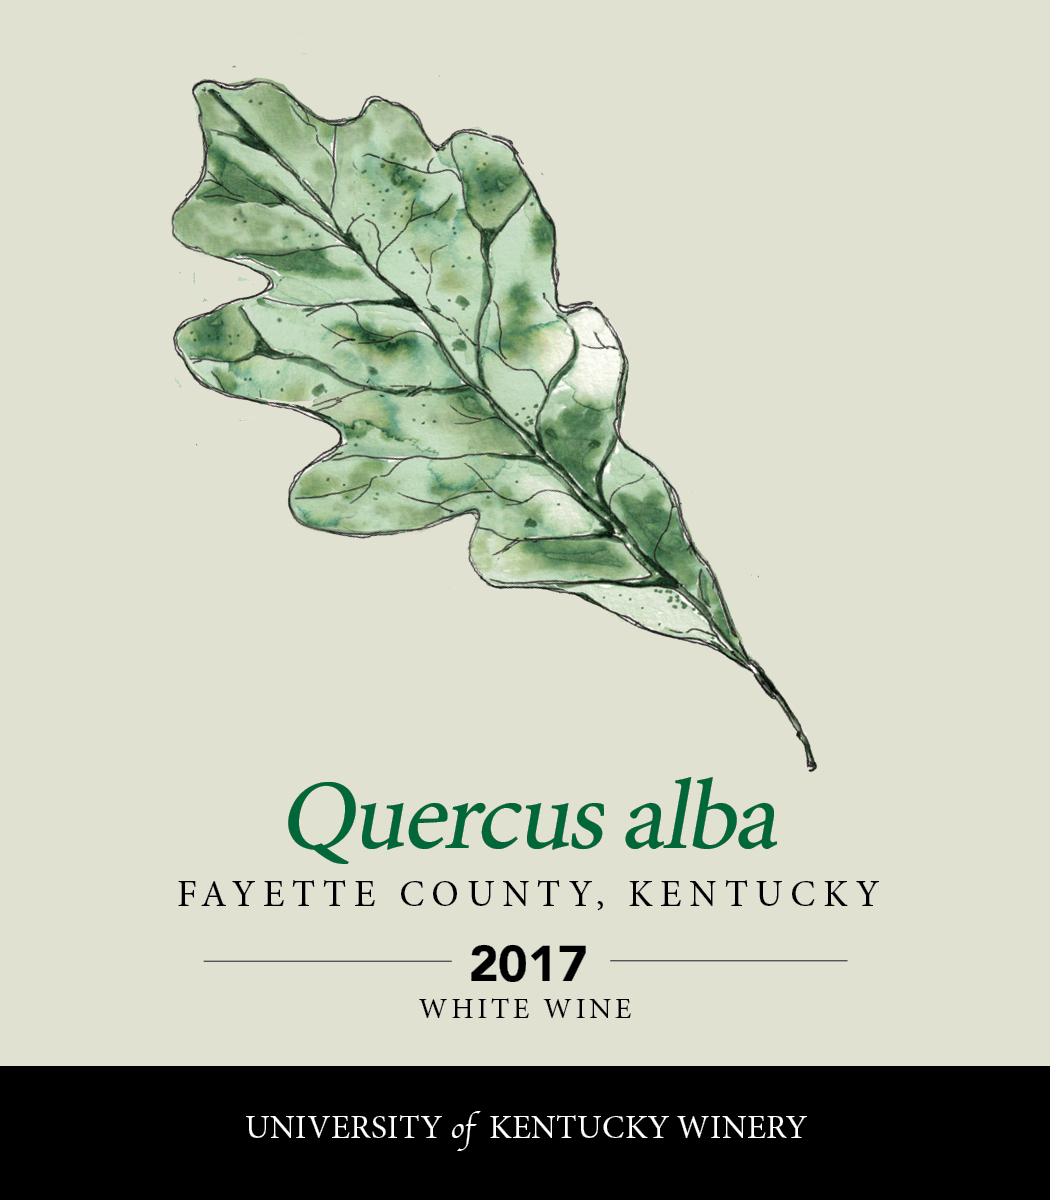 Quercus alba 2017 White wine